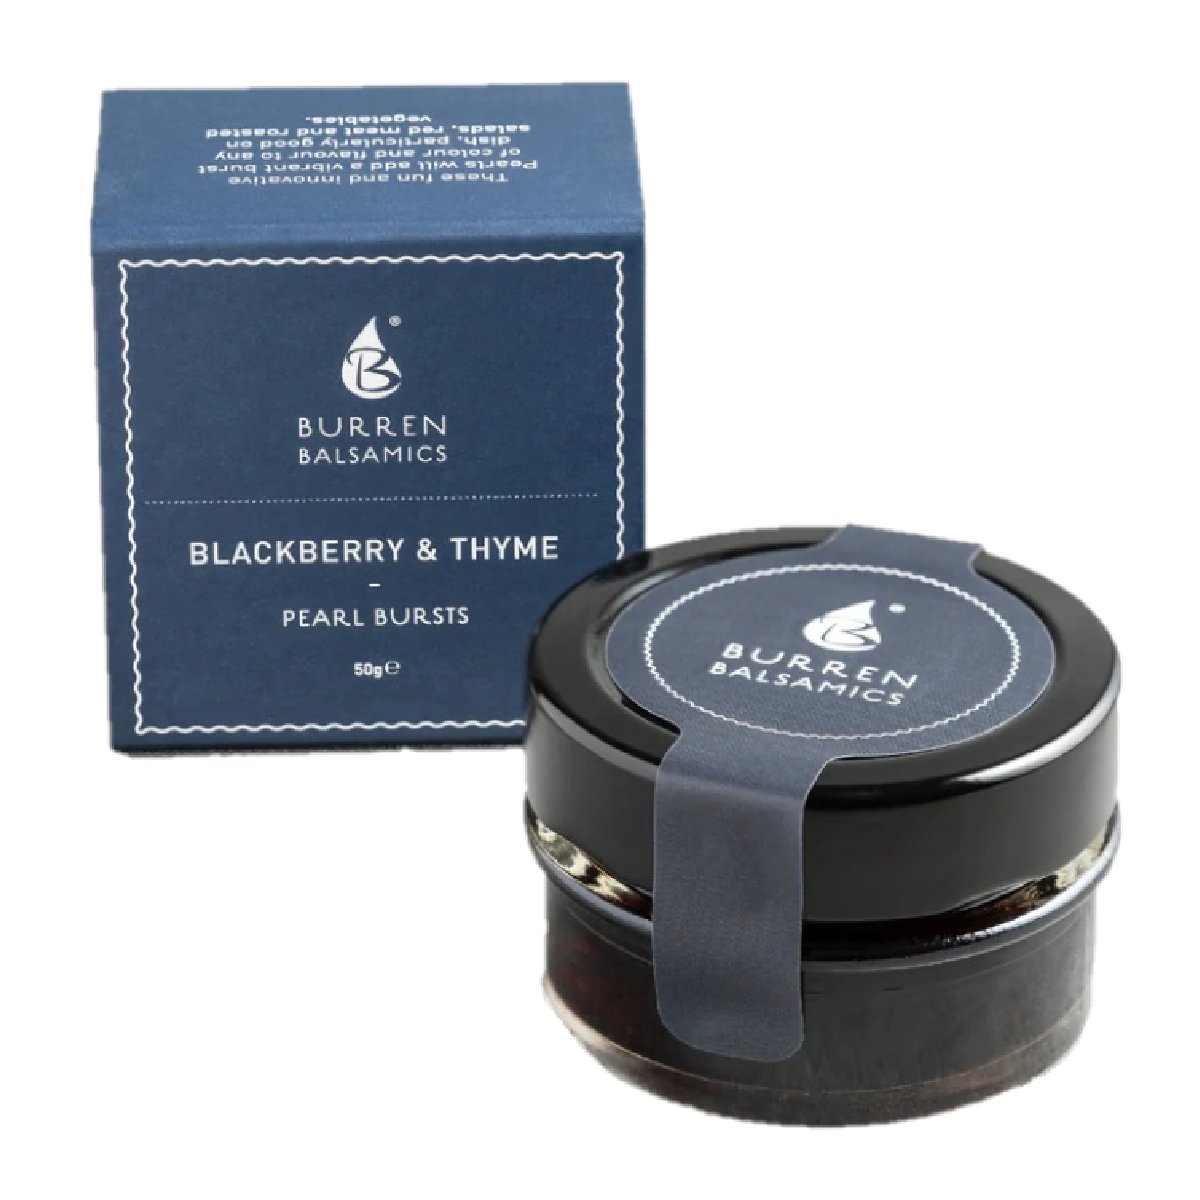 Burren Balsamics Blackberry and Thyme Pearl Bursts 50g